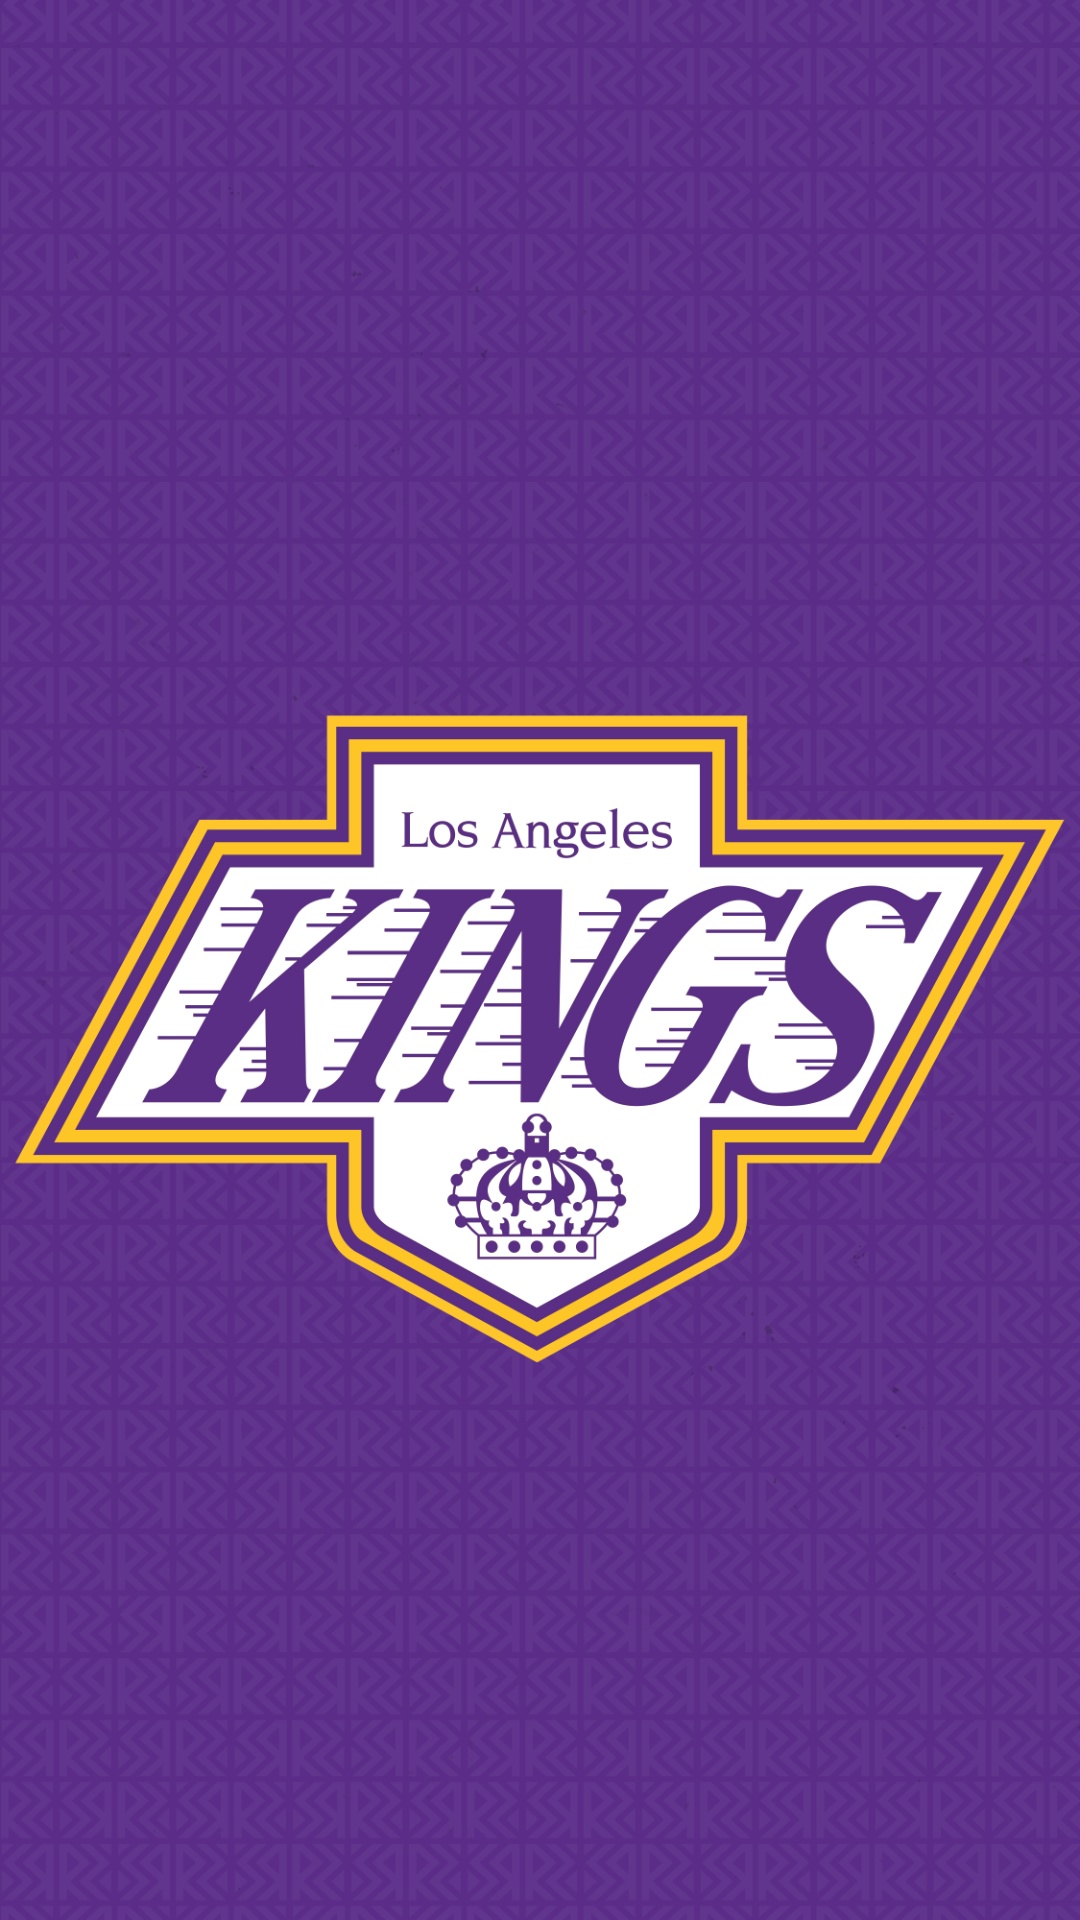 Download Big Three Los Angeles Kings Wallpaper